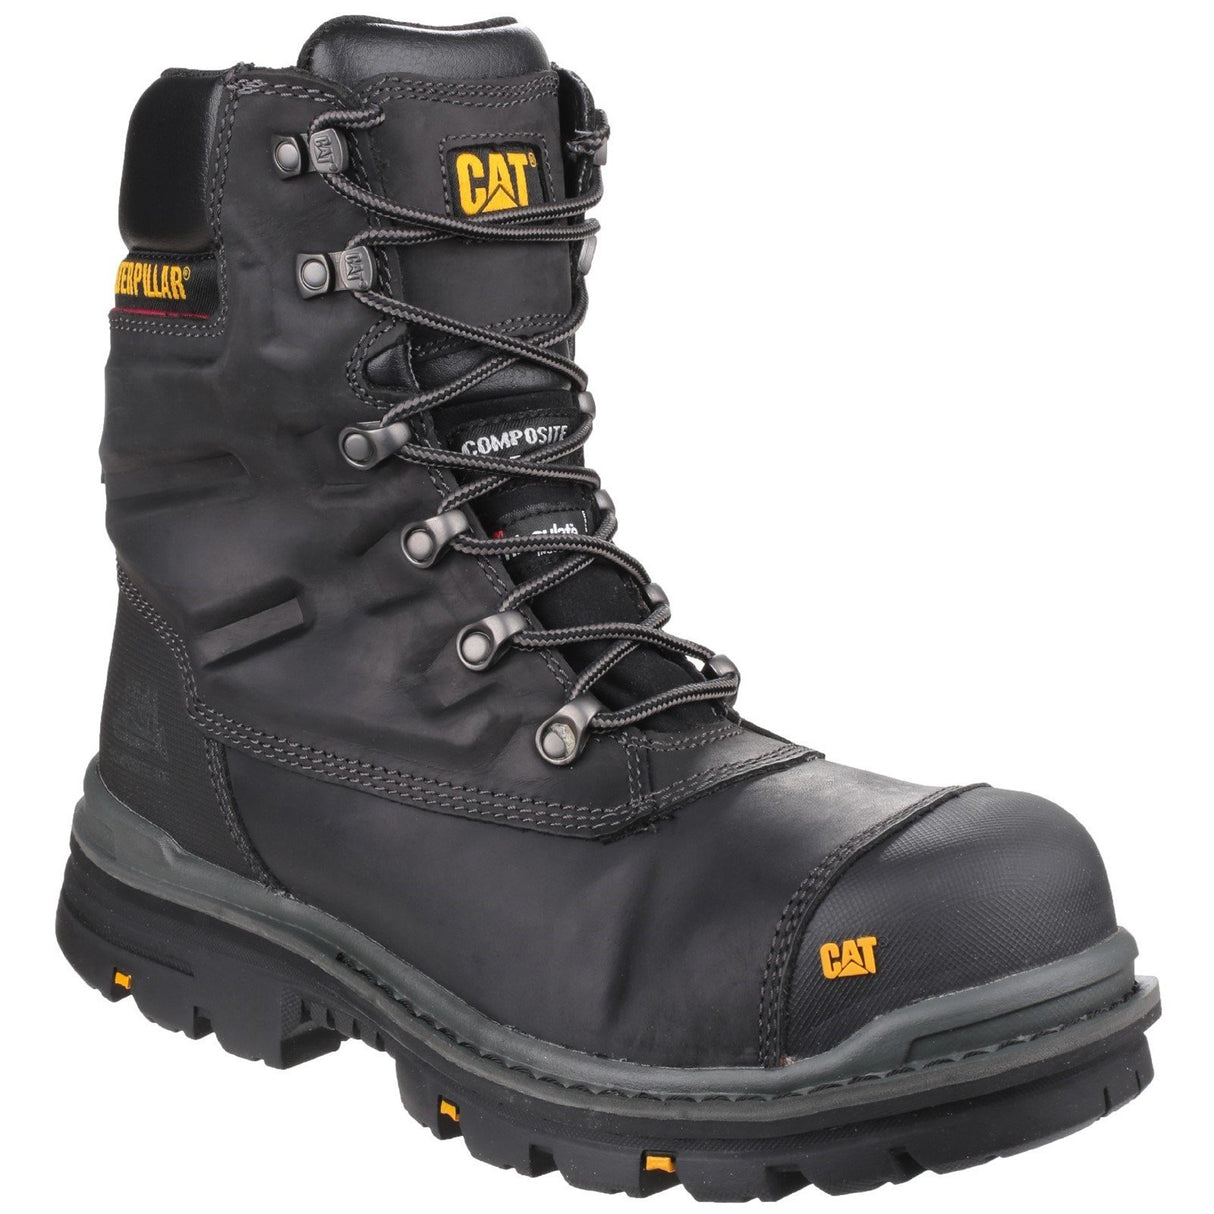 Caterpillar Premier Safety Boots